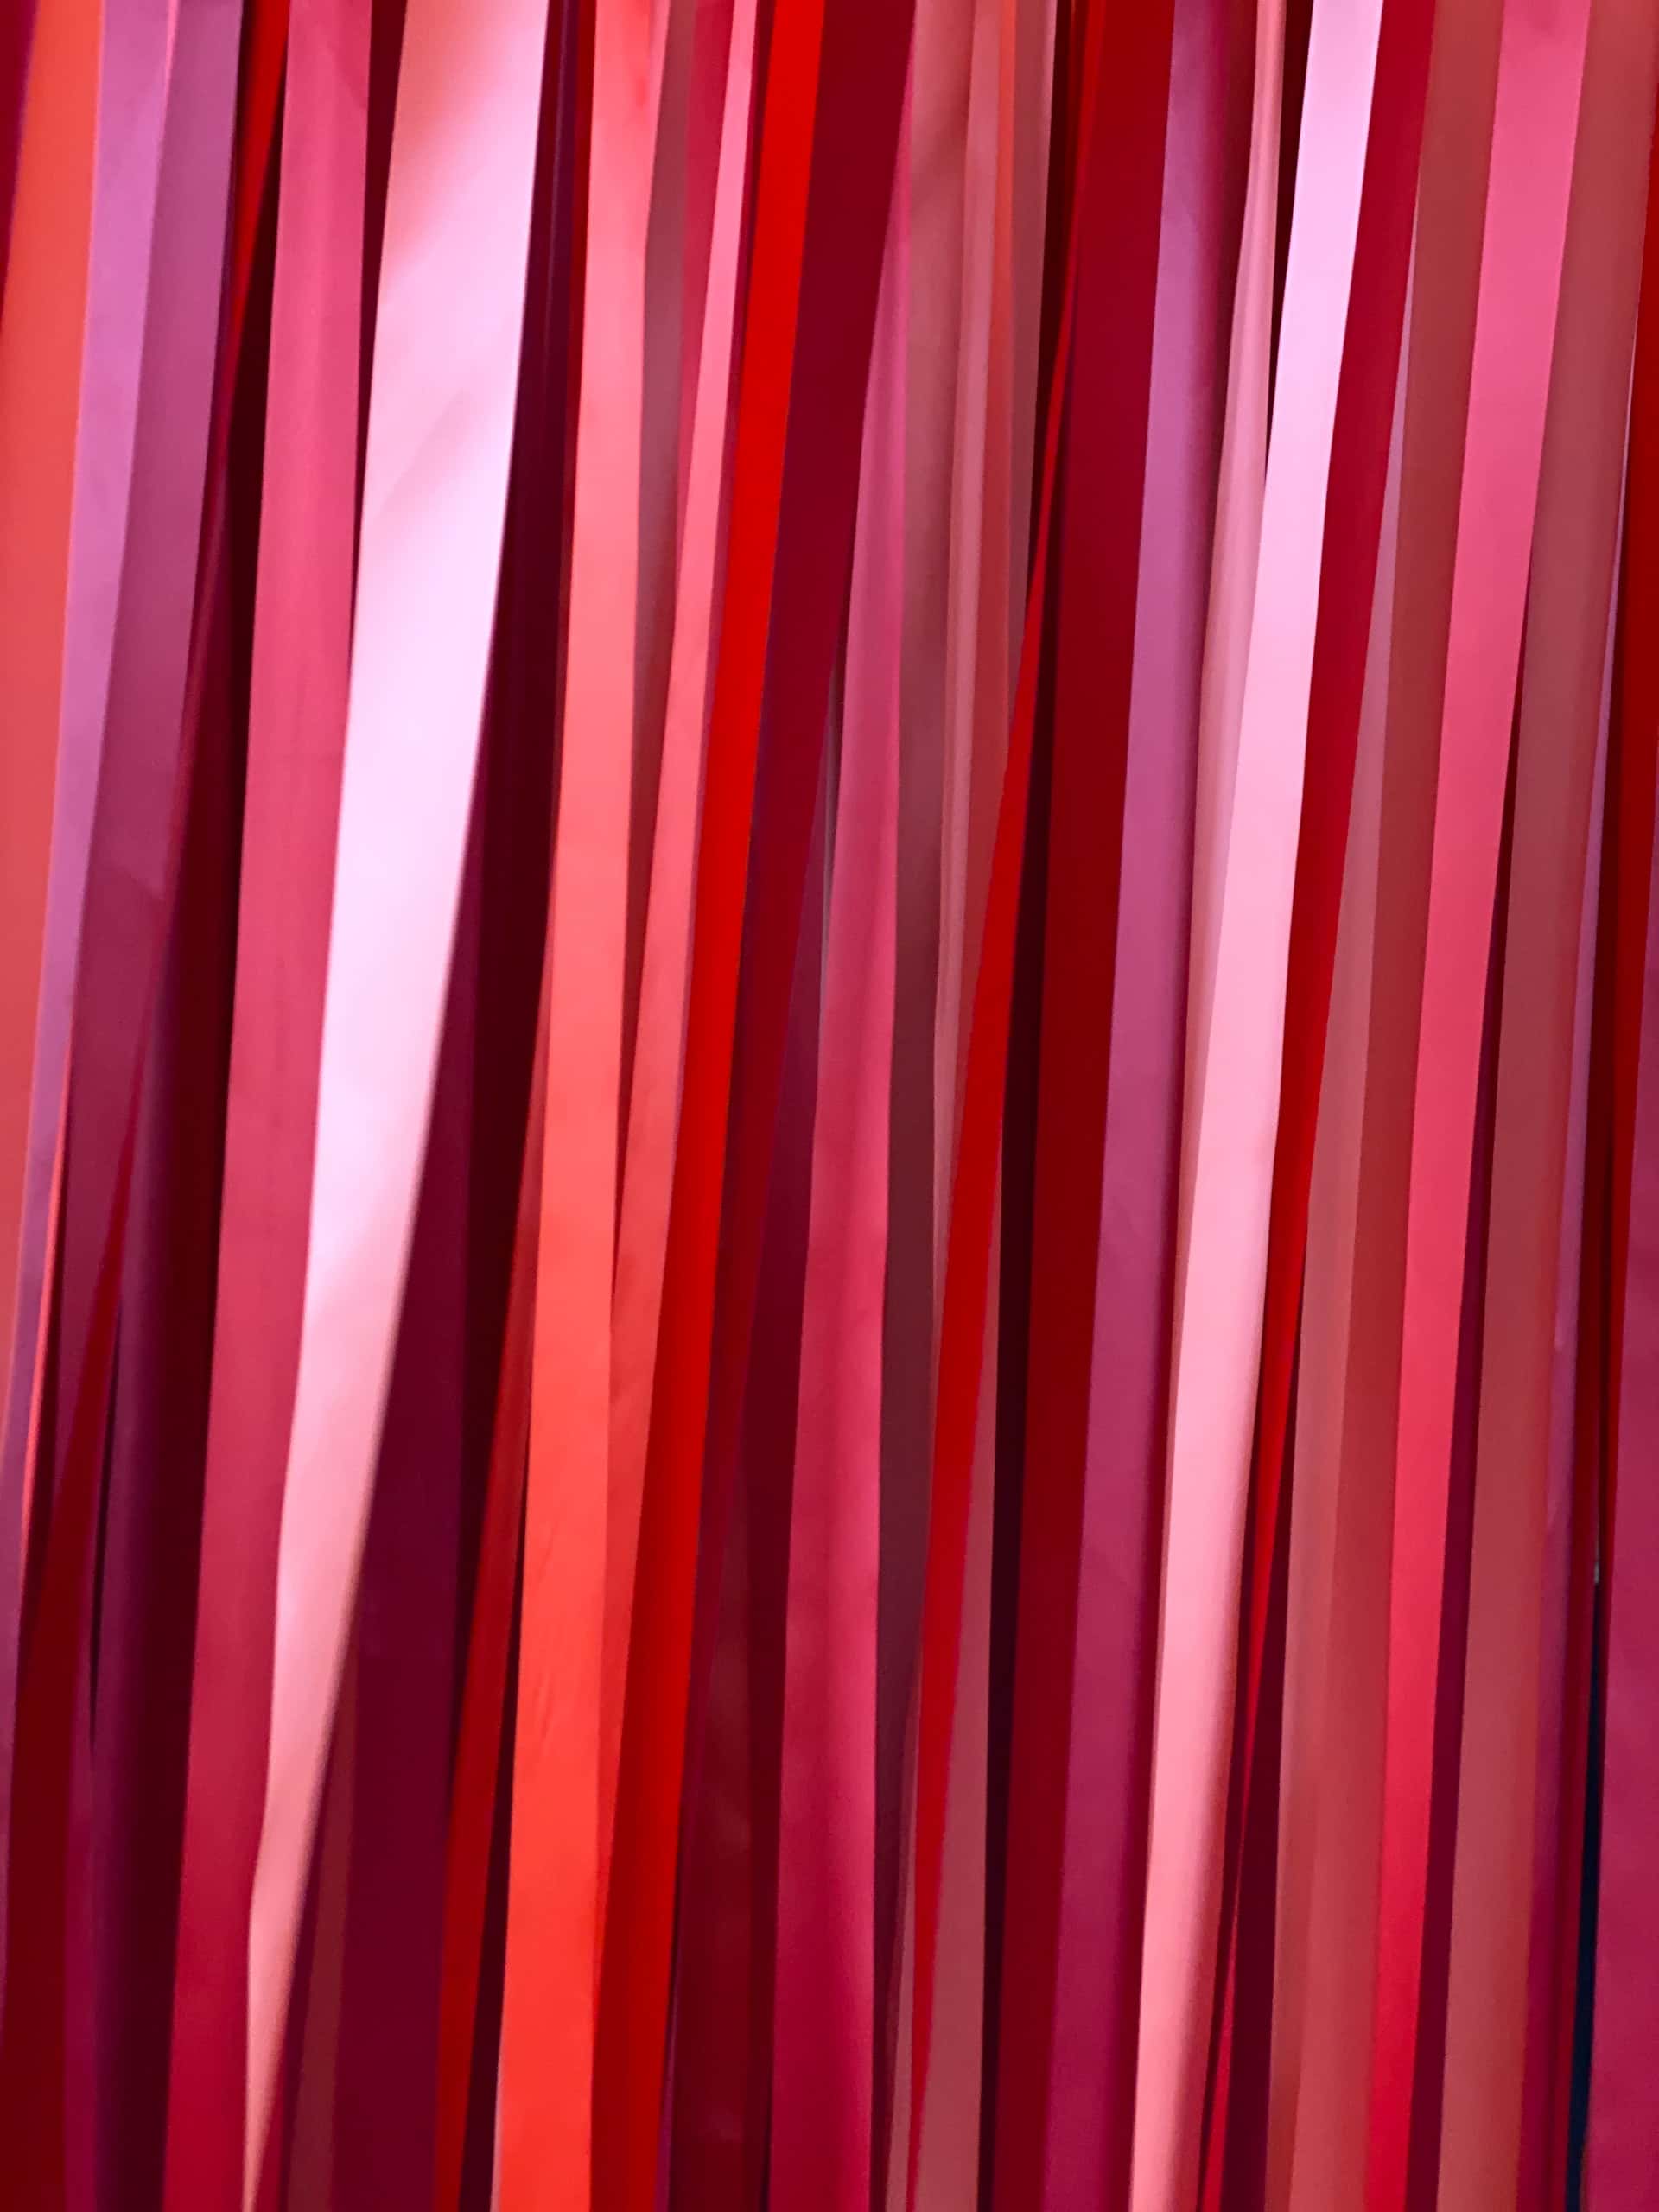 colourful striped double-curtain design